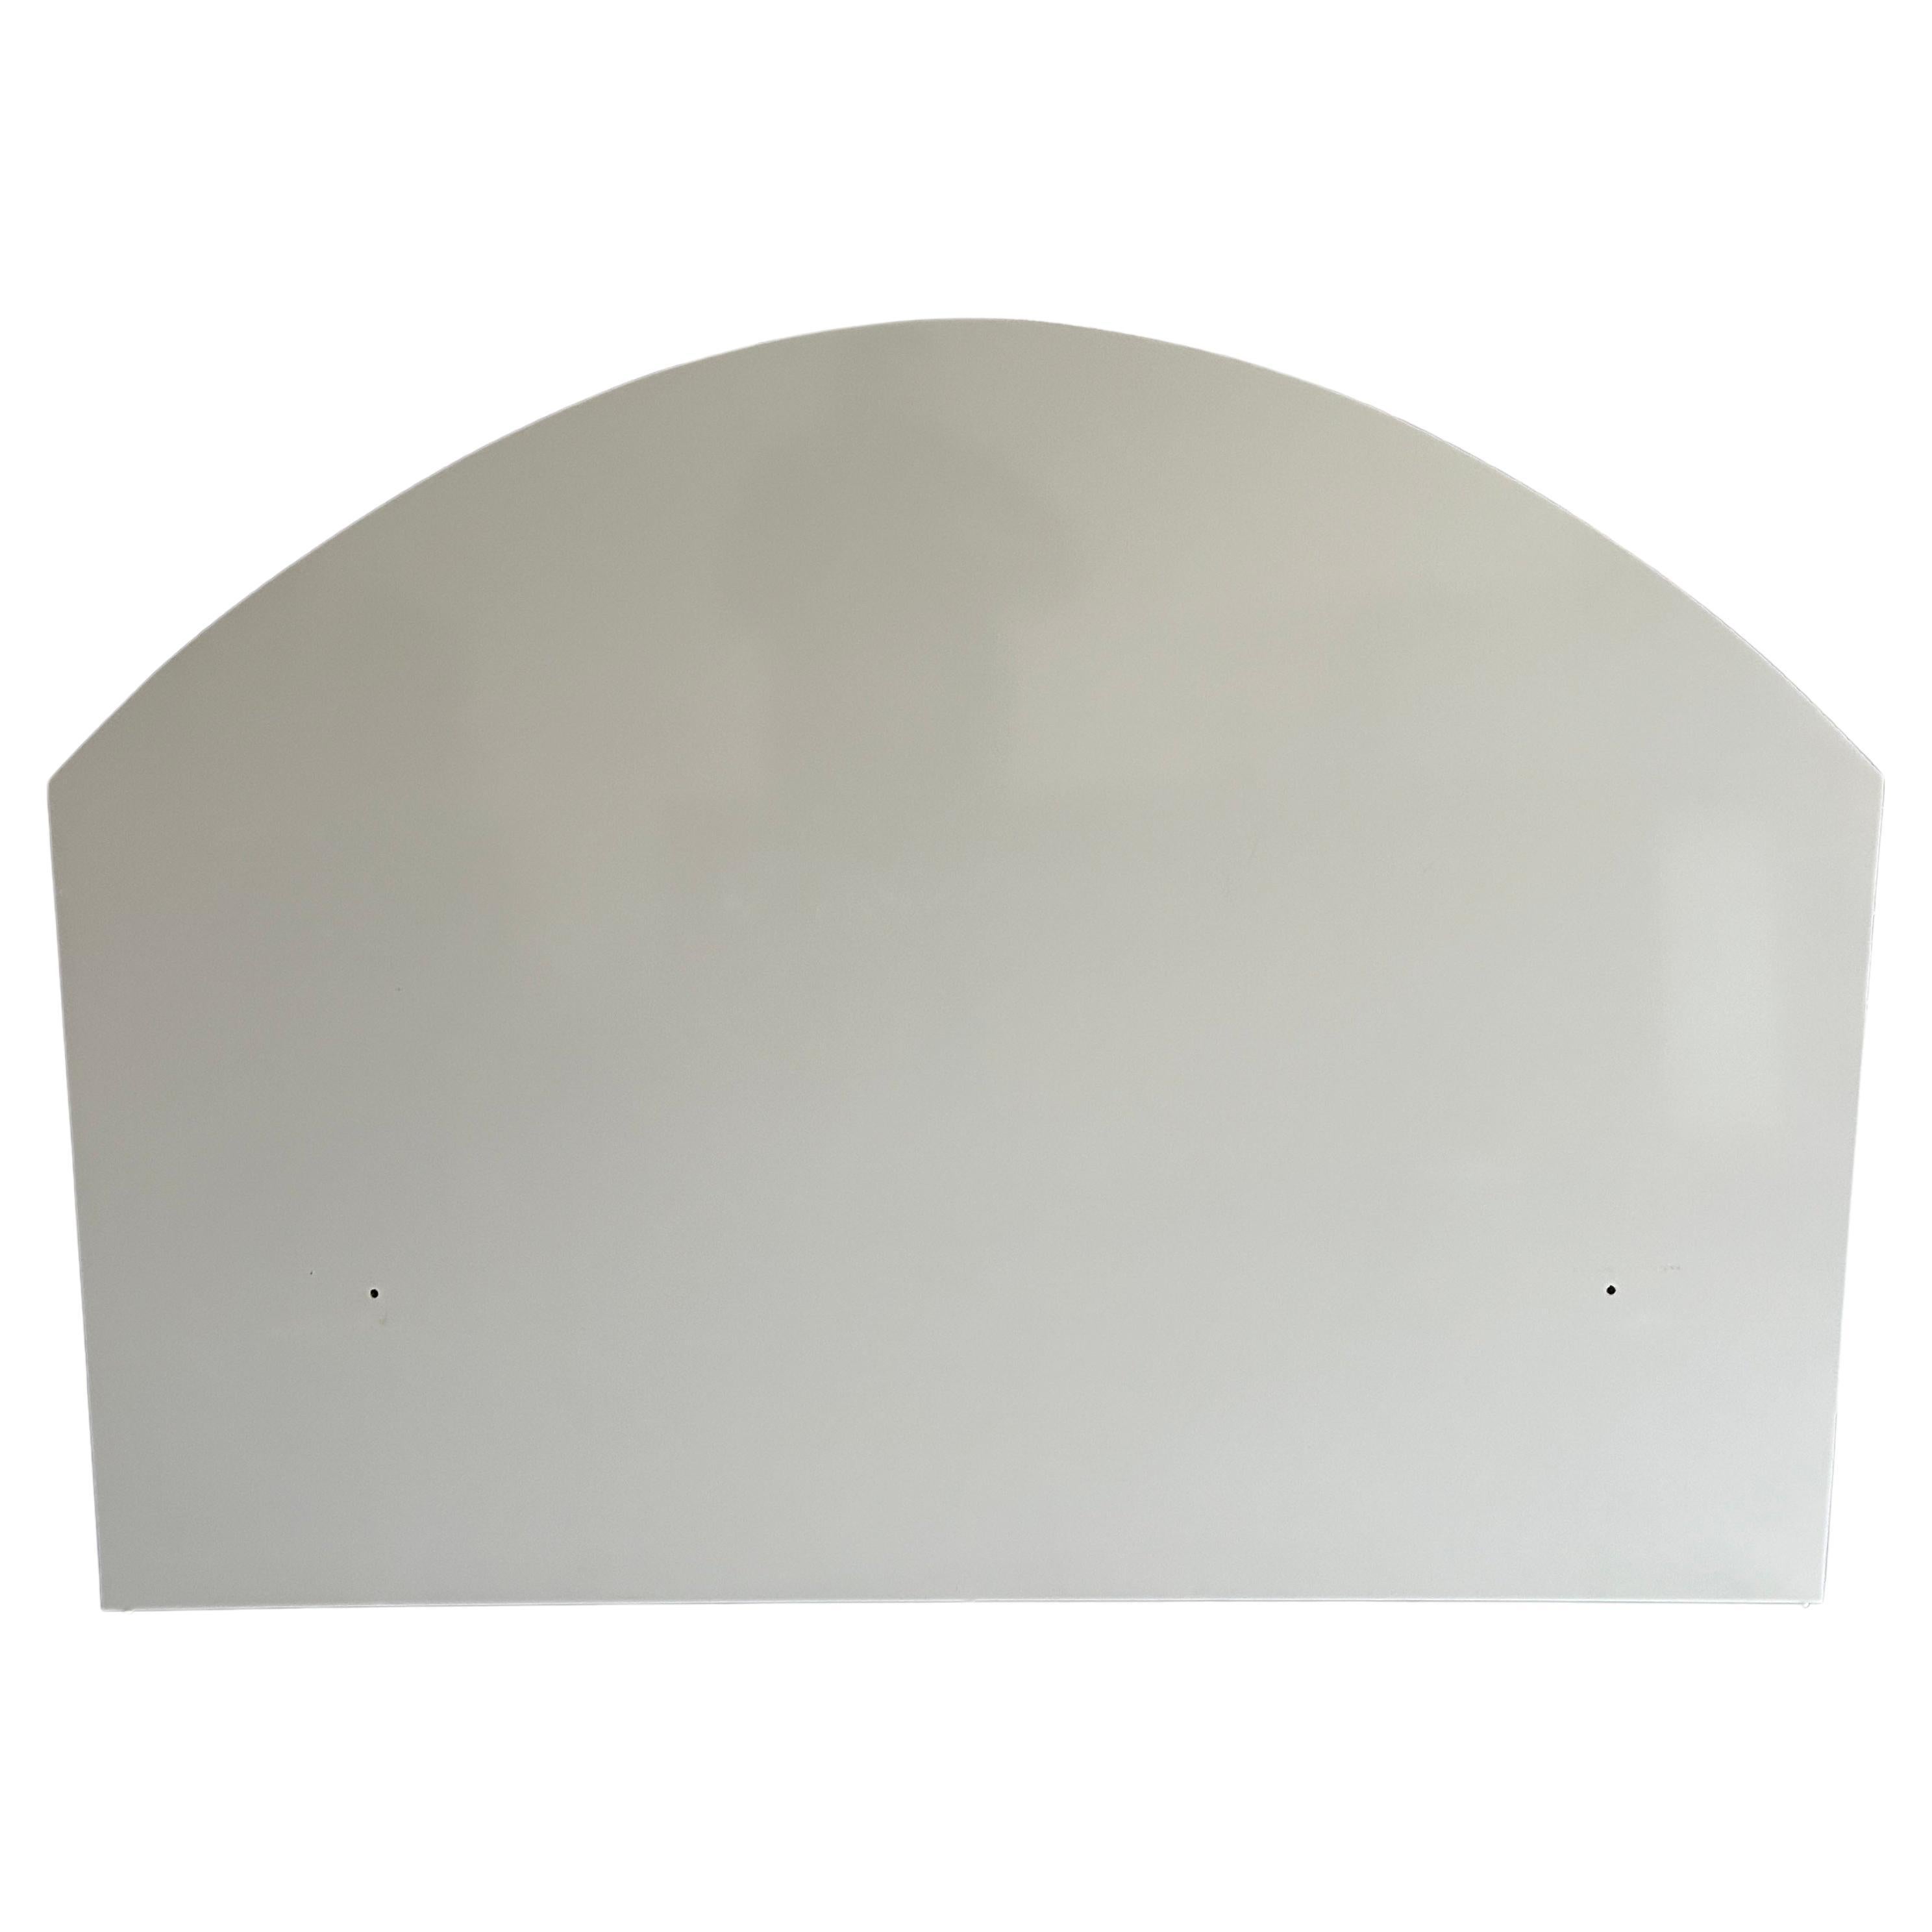 The Moderns Modernity white gloss laminate simple curved queen bed headboard (tête de lit queen courbée) 